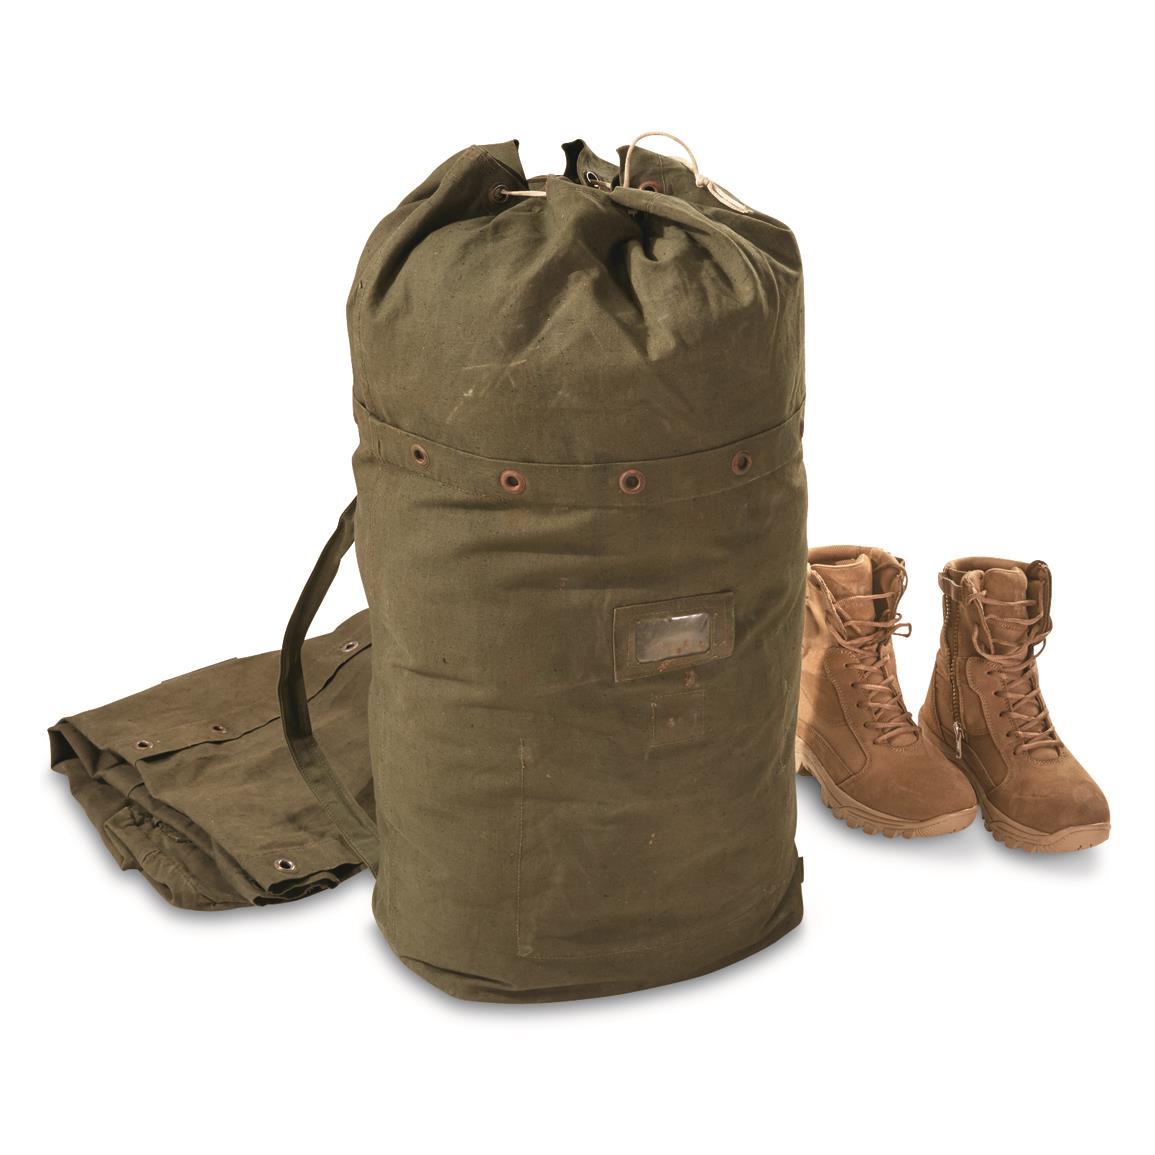 Hungarian Military Surplus Duffel Bags, 2 Pack, Used - 681215, Military & Camo Duffle Bags at ...